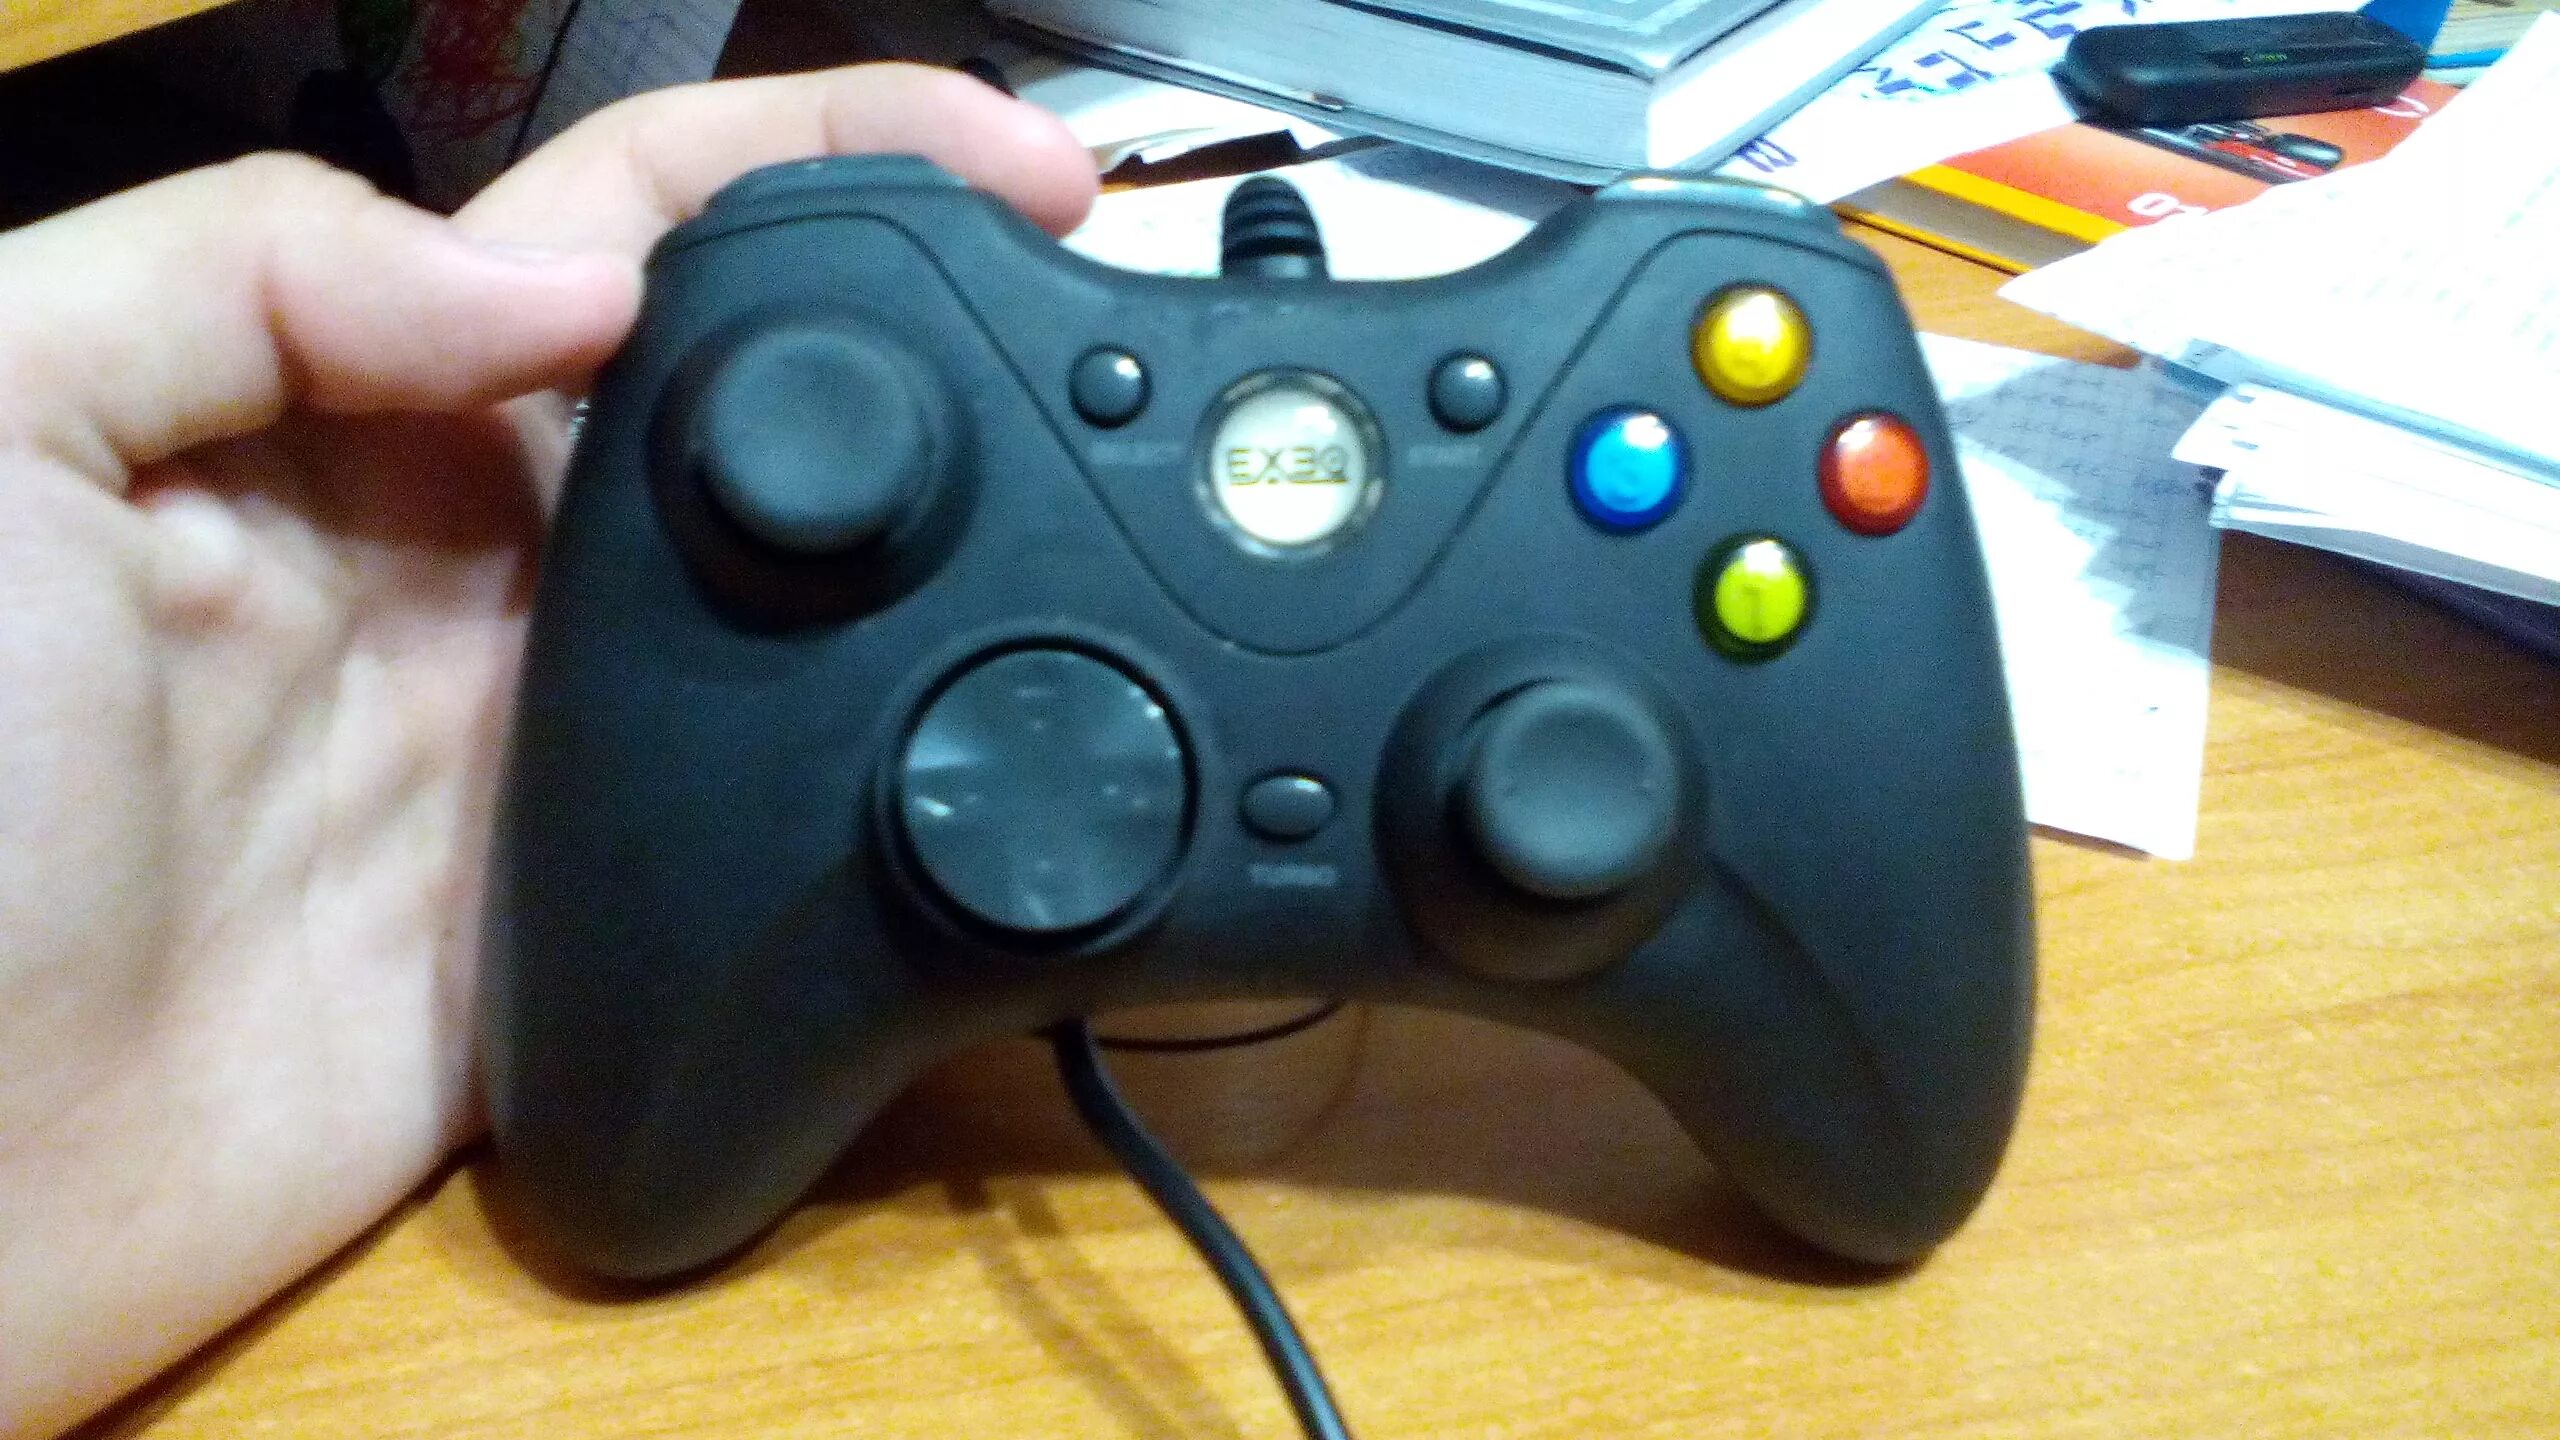 Джойстик DC Xbox 360. Lb на джойстике Xbox 360. Геймпад Hori Onyx Plus Wireless Controller ps4, черный. Кнопка RB на джойстике Xbox 360. Включить джойстик 360